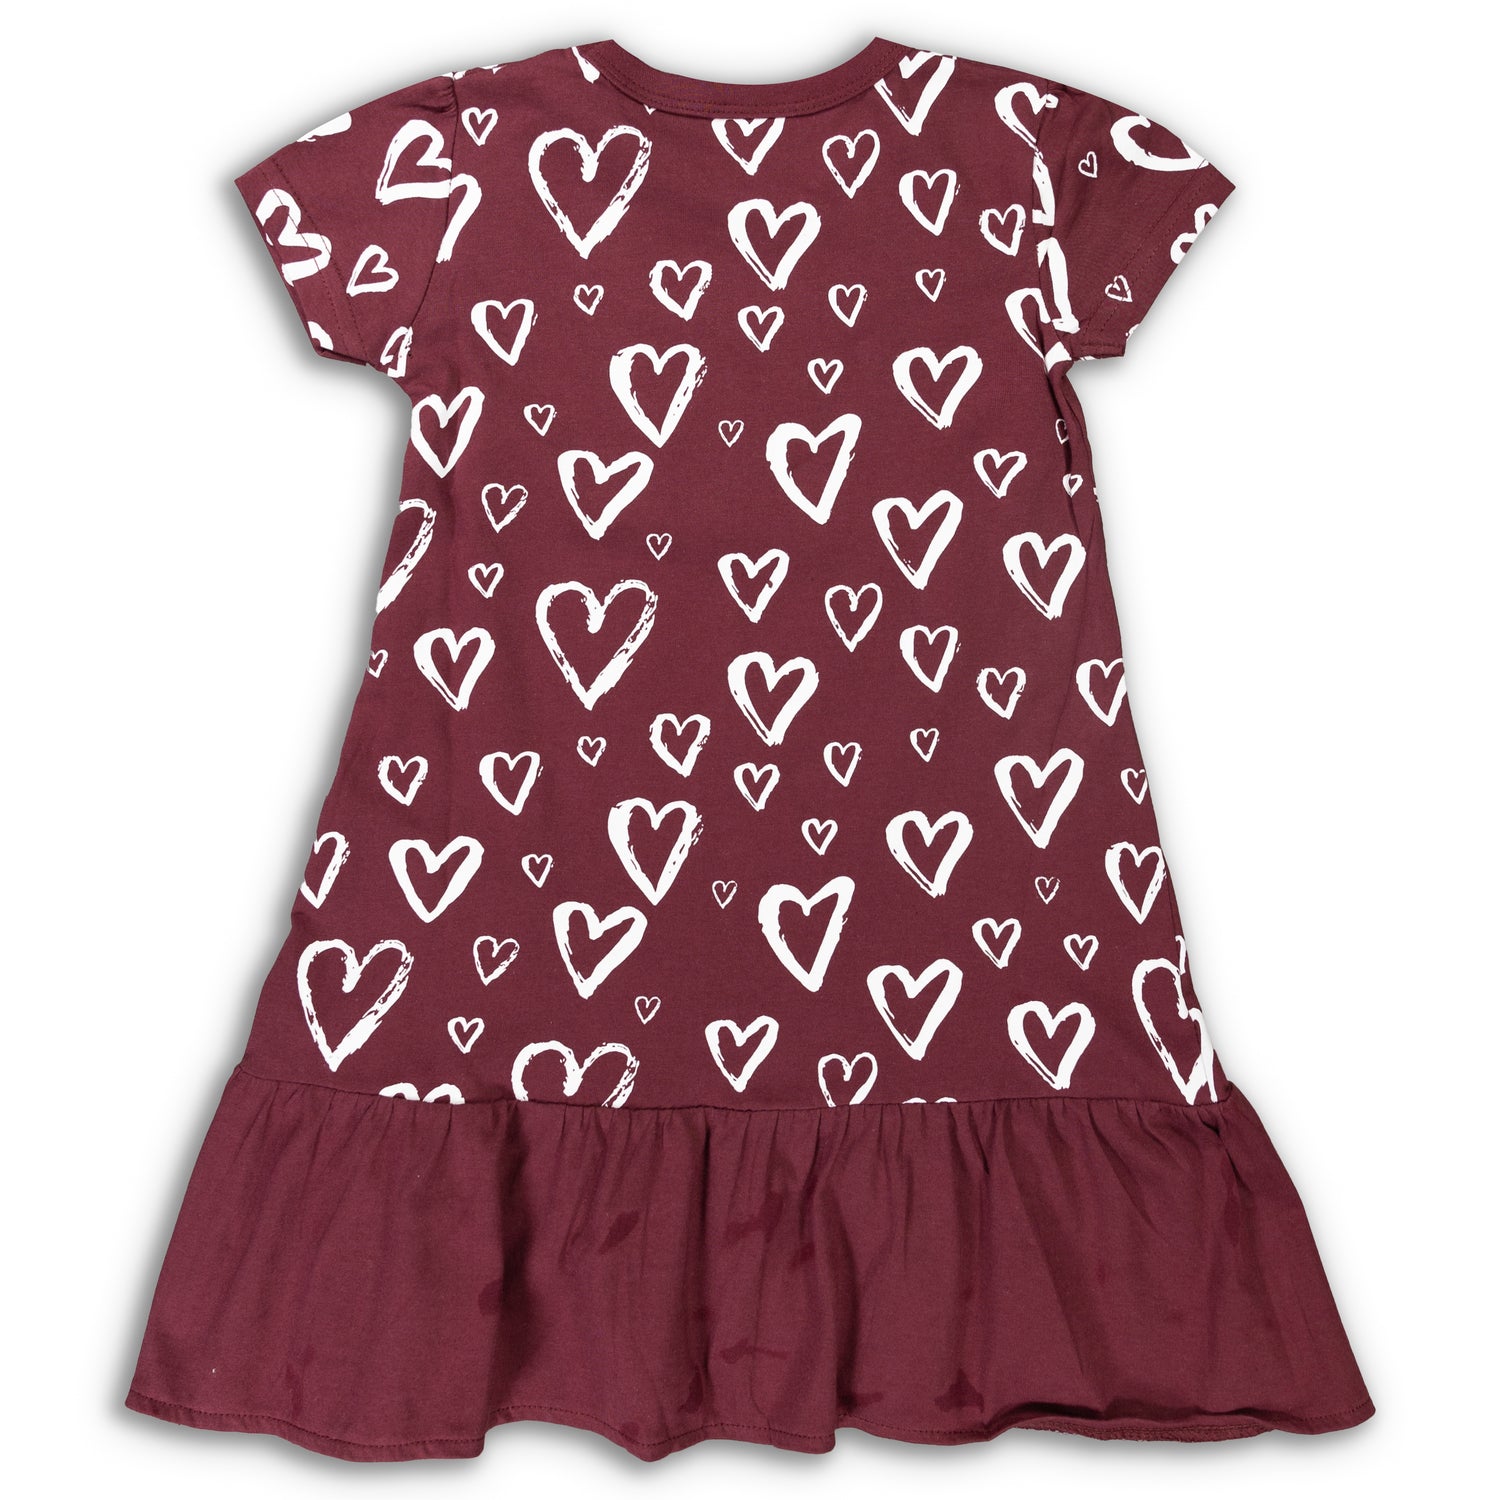 Toddler Distressed Heart Dress